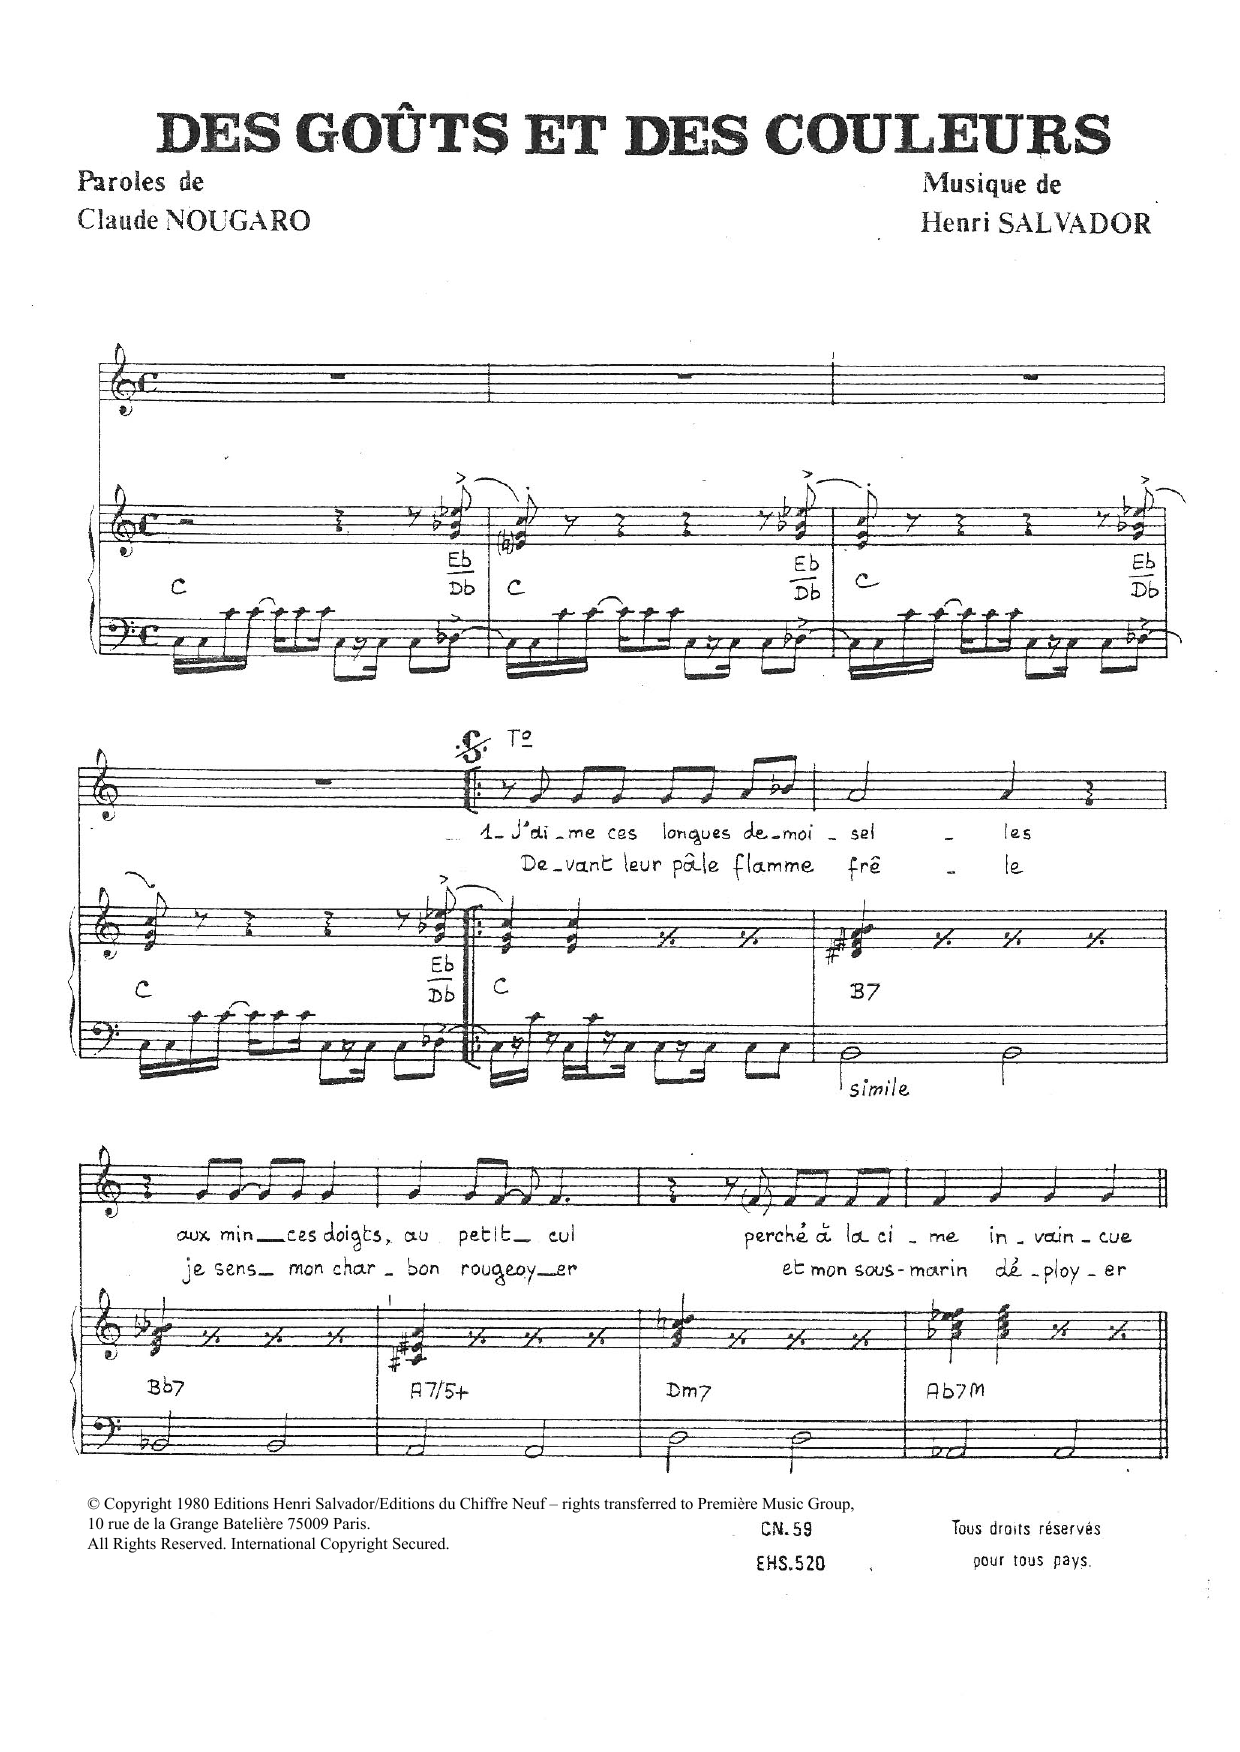 Claude Nougaro Gouts Et Des Couleurs Sheet Music Notes & Chords for Piano & Vocal - Download or Print PDF